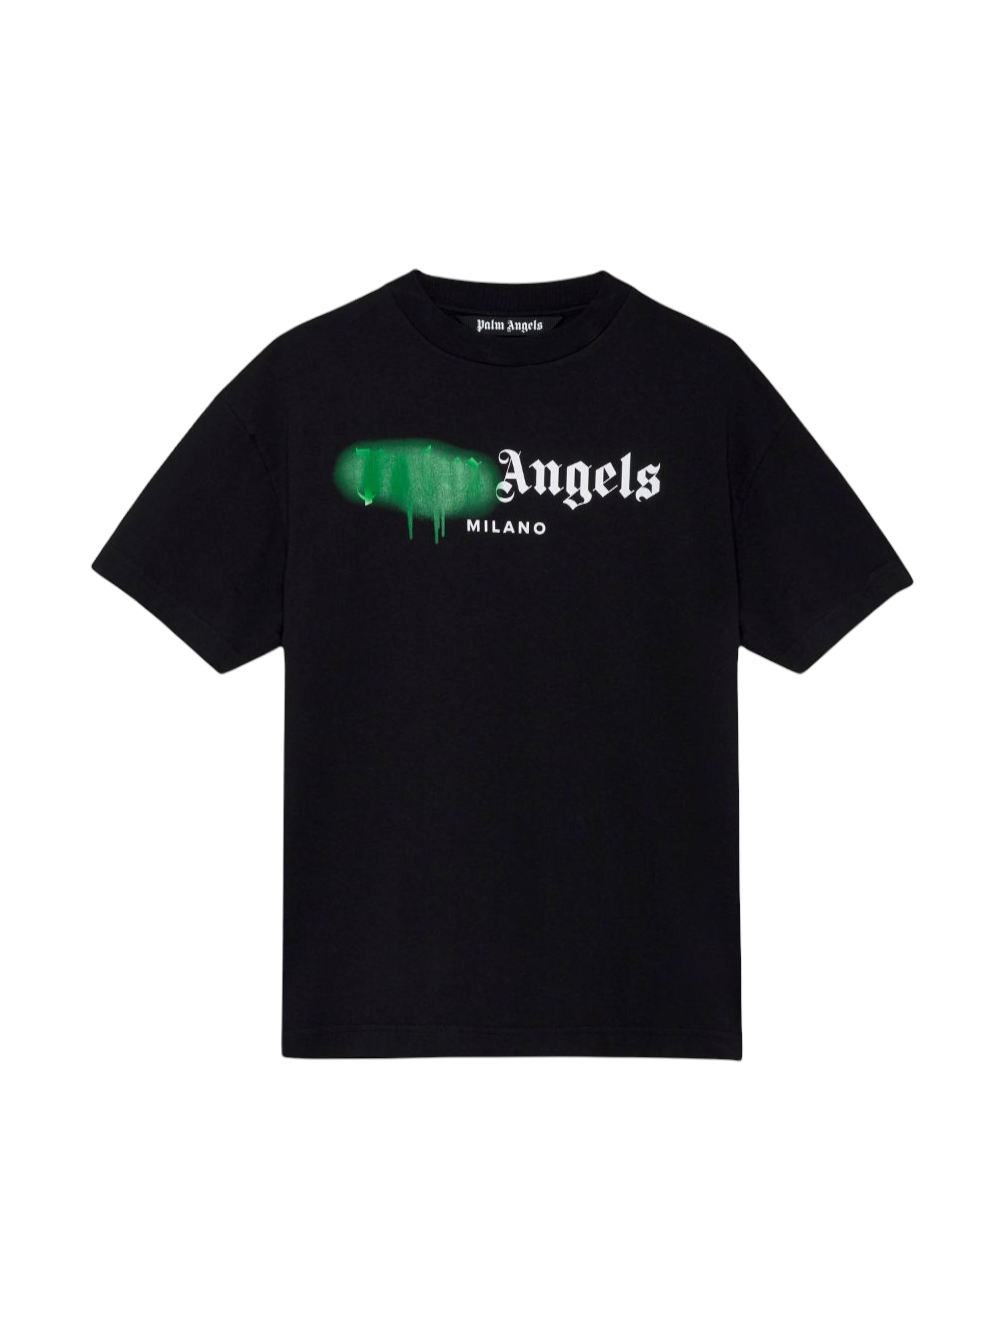 Palm Angels Spray Paint T-Shirt